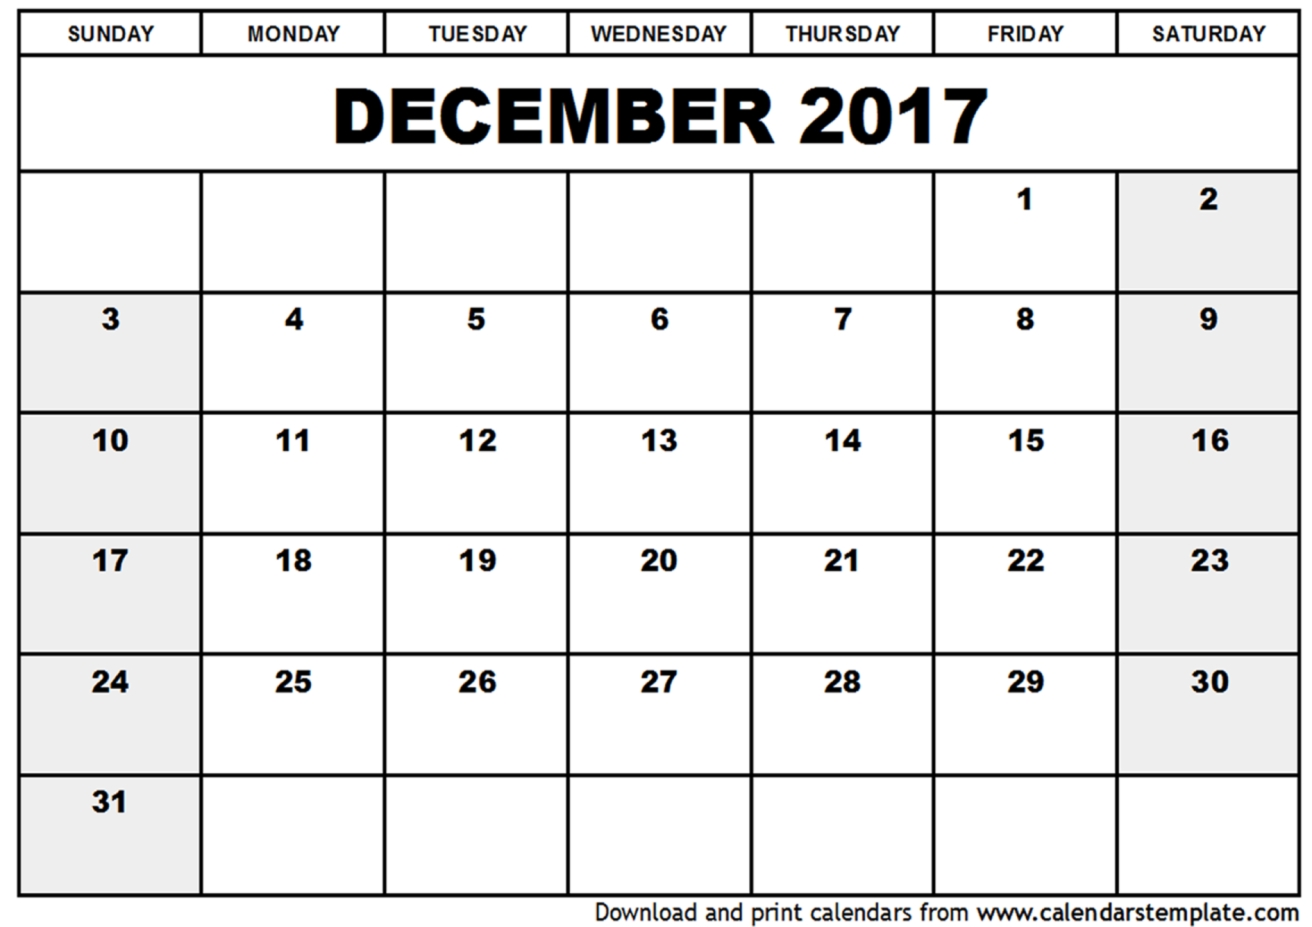 2017-december-free-printable-calendar-calendar-templates-world